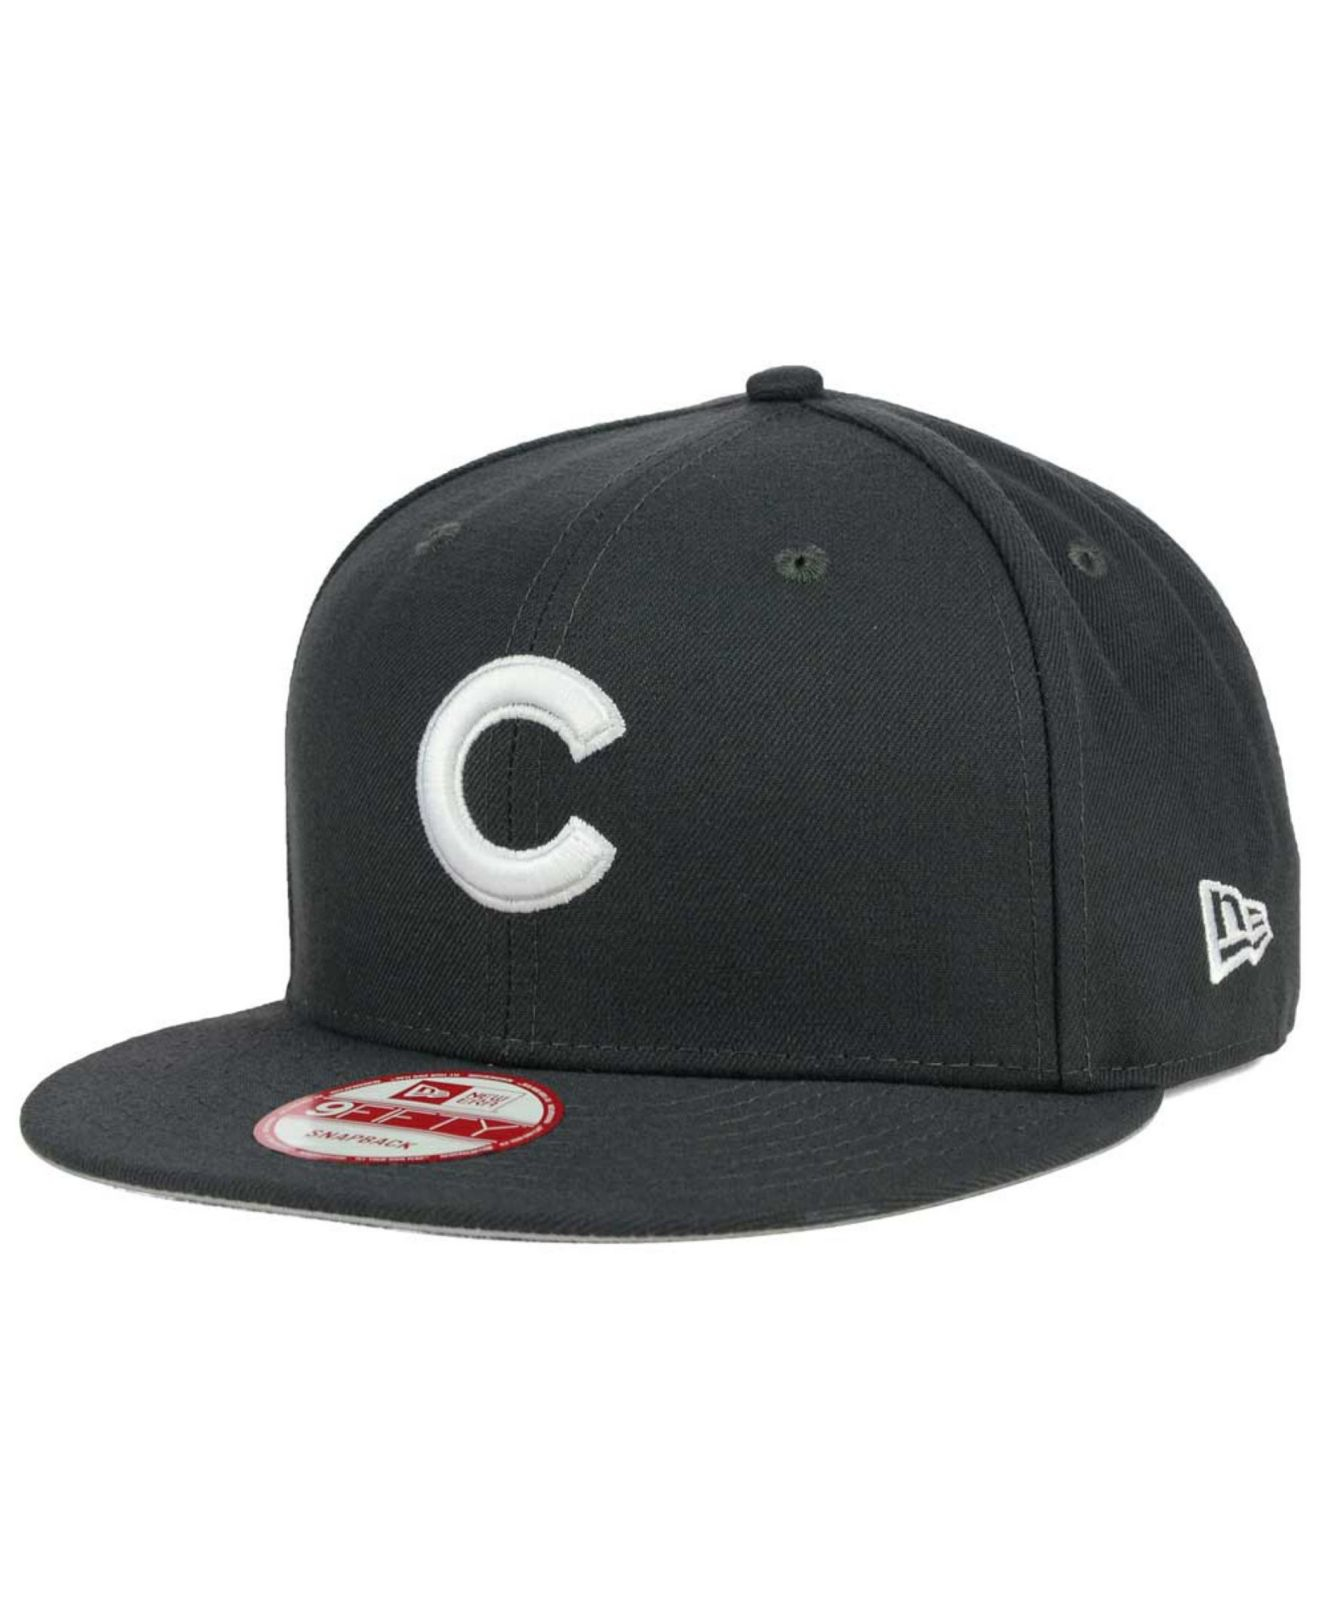 Lyst - Ktz Chicago Cubs C-dub 9fifty Snapback Cap in Black for Men